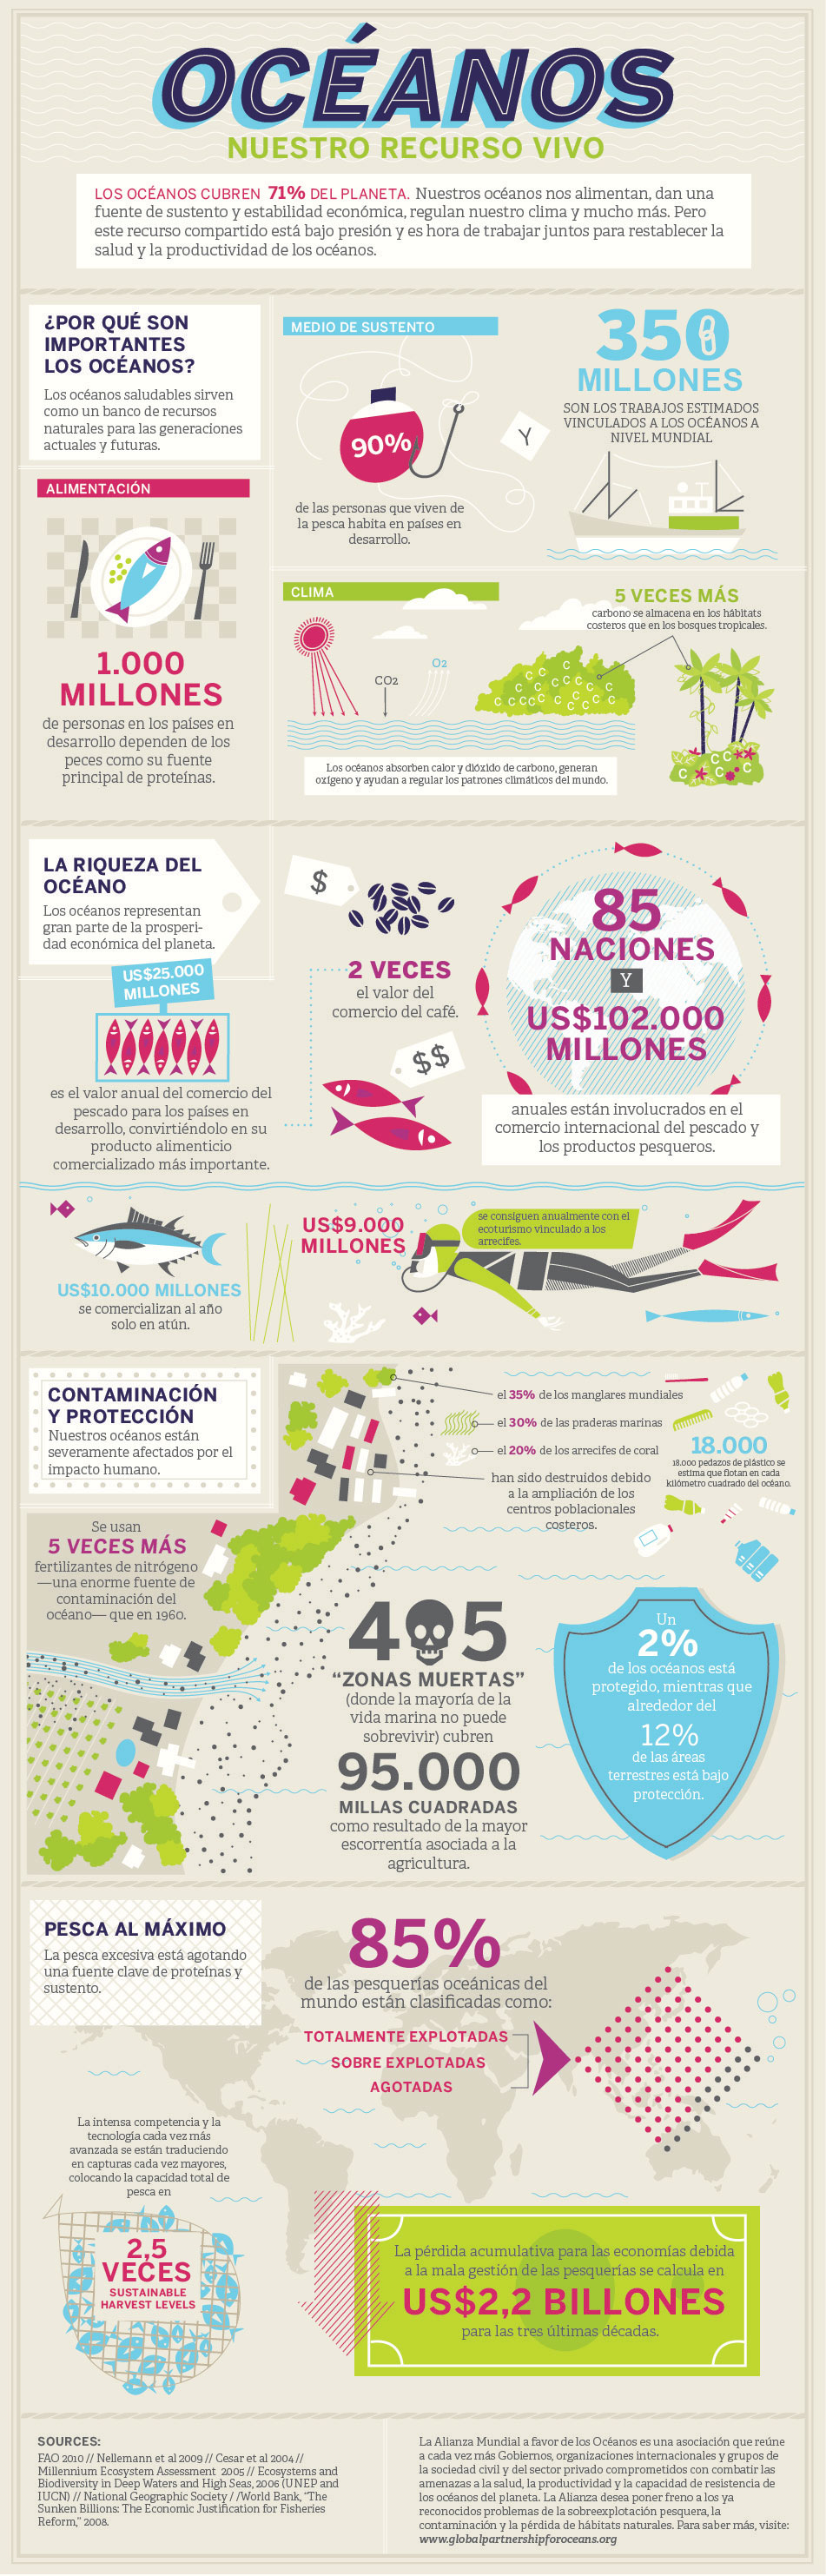 oceans-infographic-sp-web